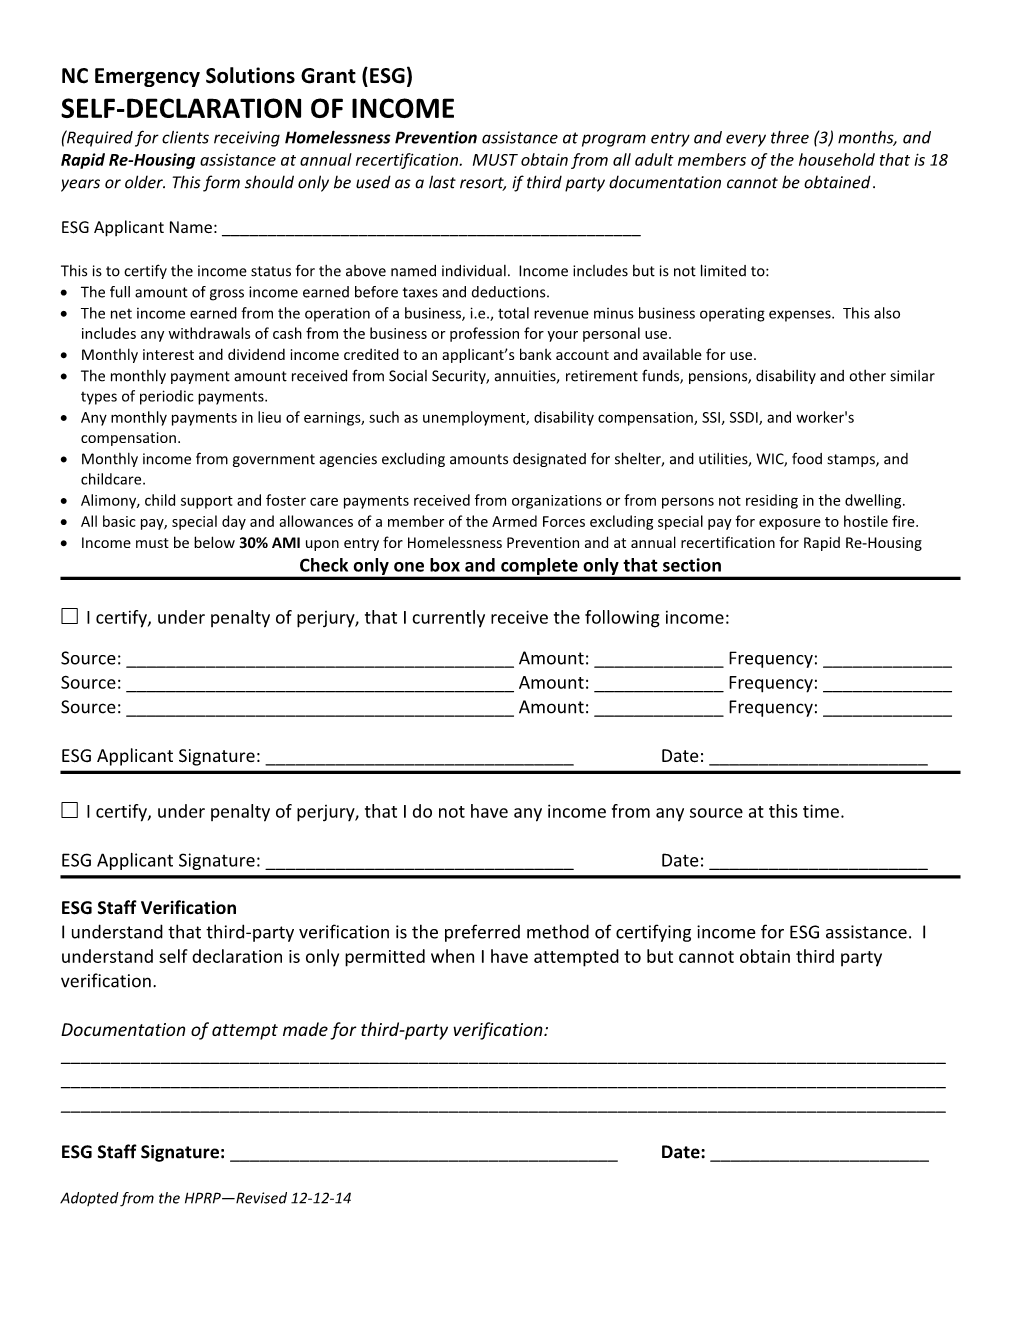 Homeless Certification Form s1